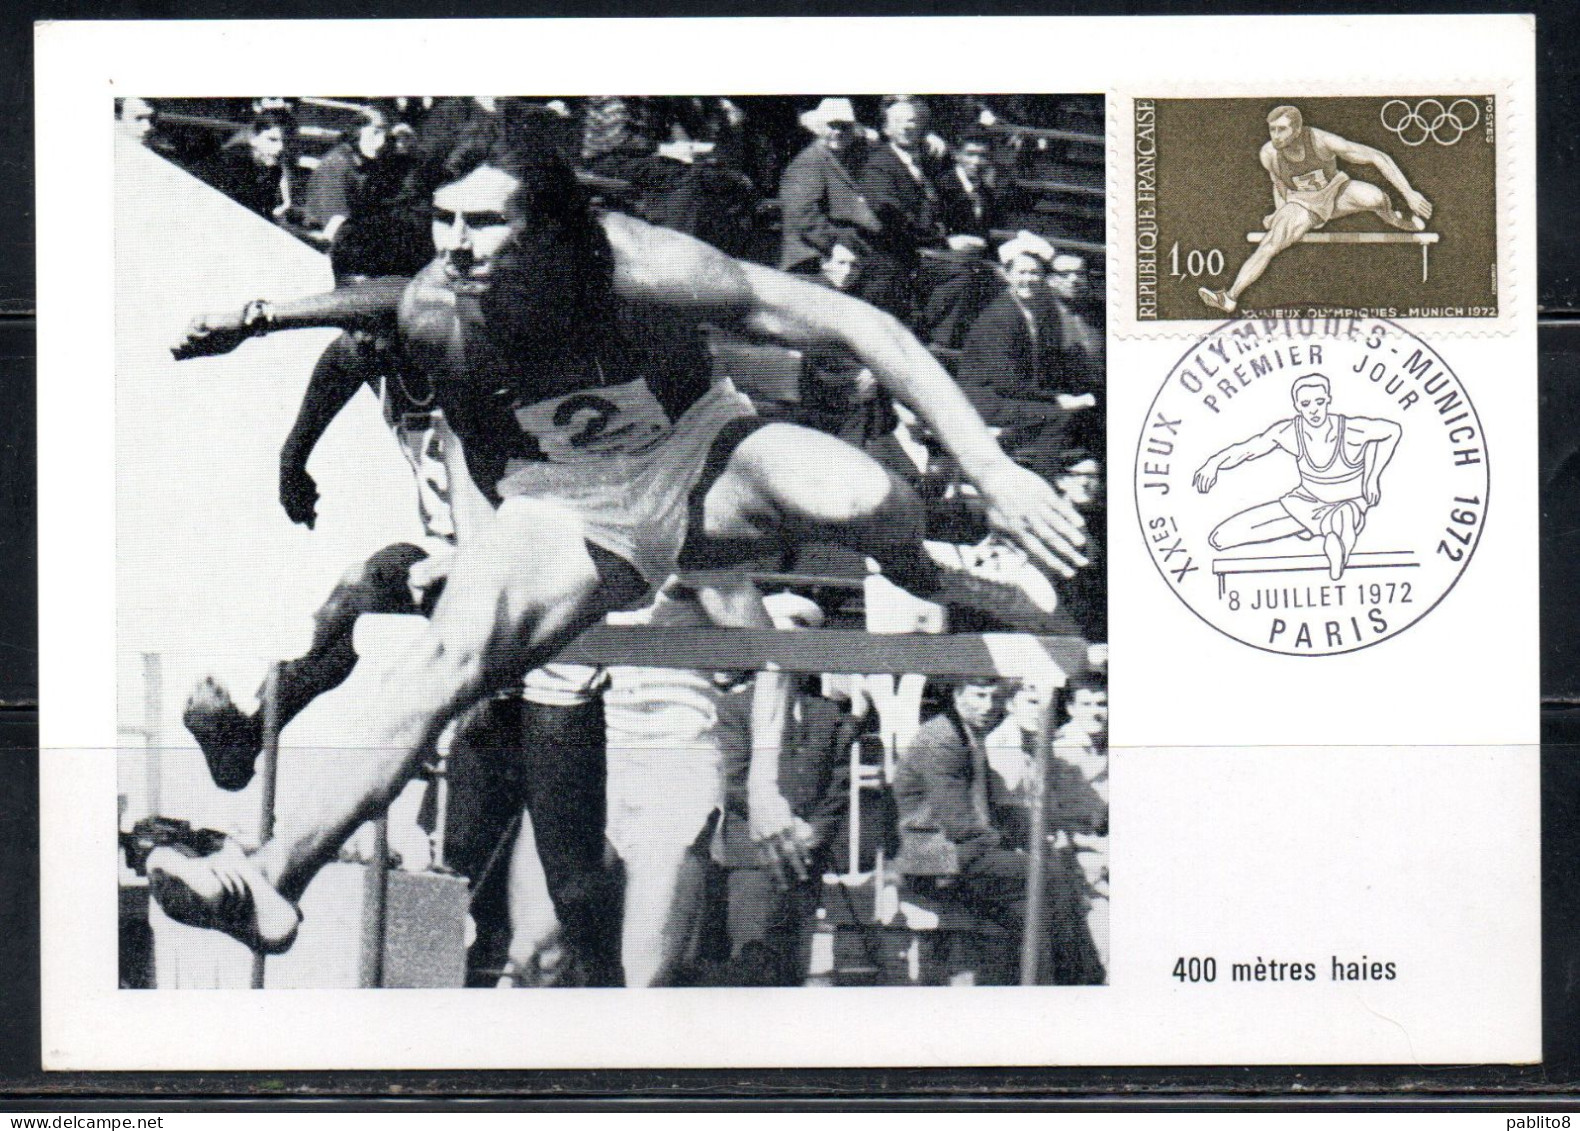 FRANCE FRANCIA 1972 OLYMPIC GAMES OLYMPICS HURDLER RING JEUX OLYMPIQUES DE MUNICH 1fr MAXI MAXIMUM CARD CARTE - 1970-1979